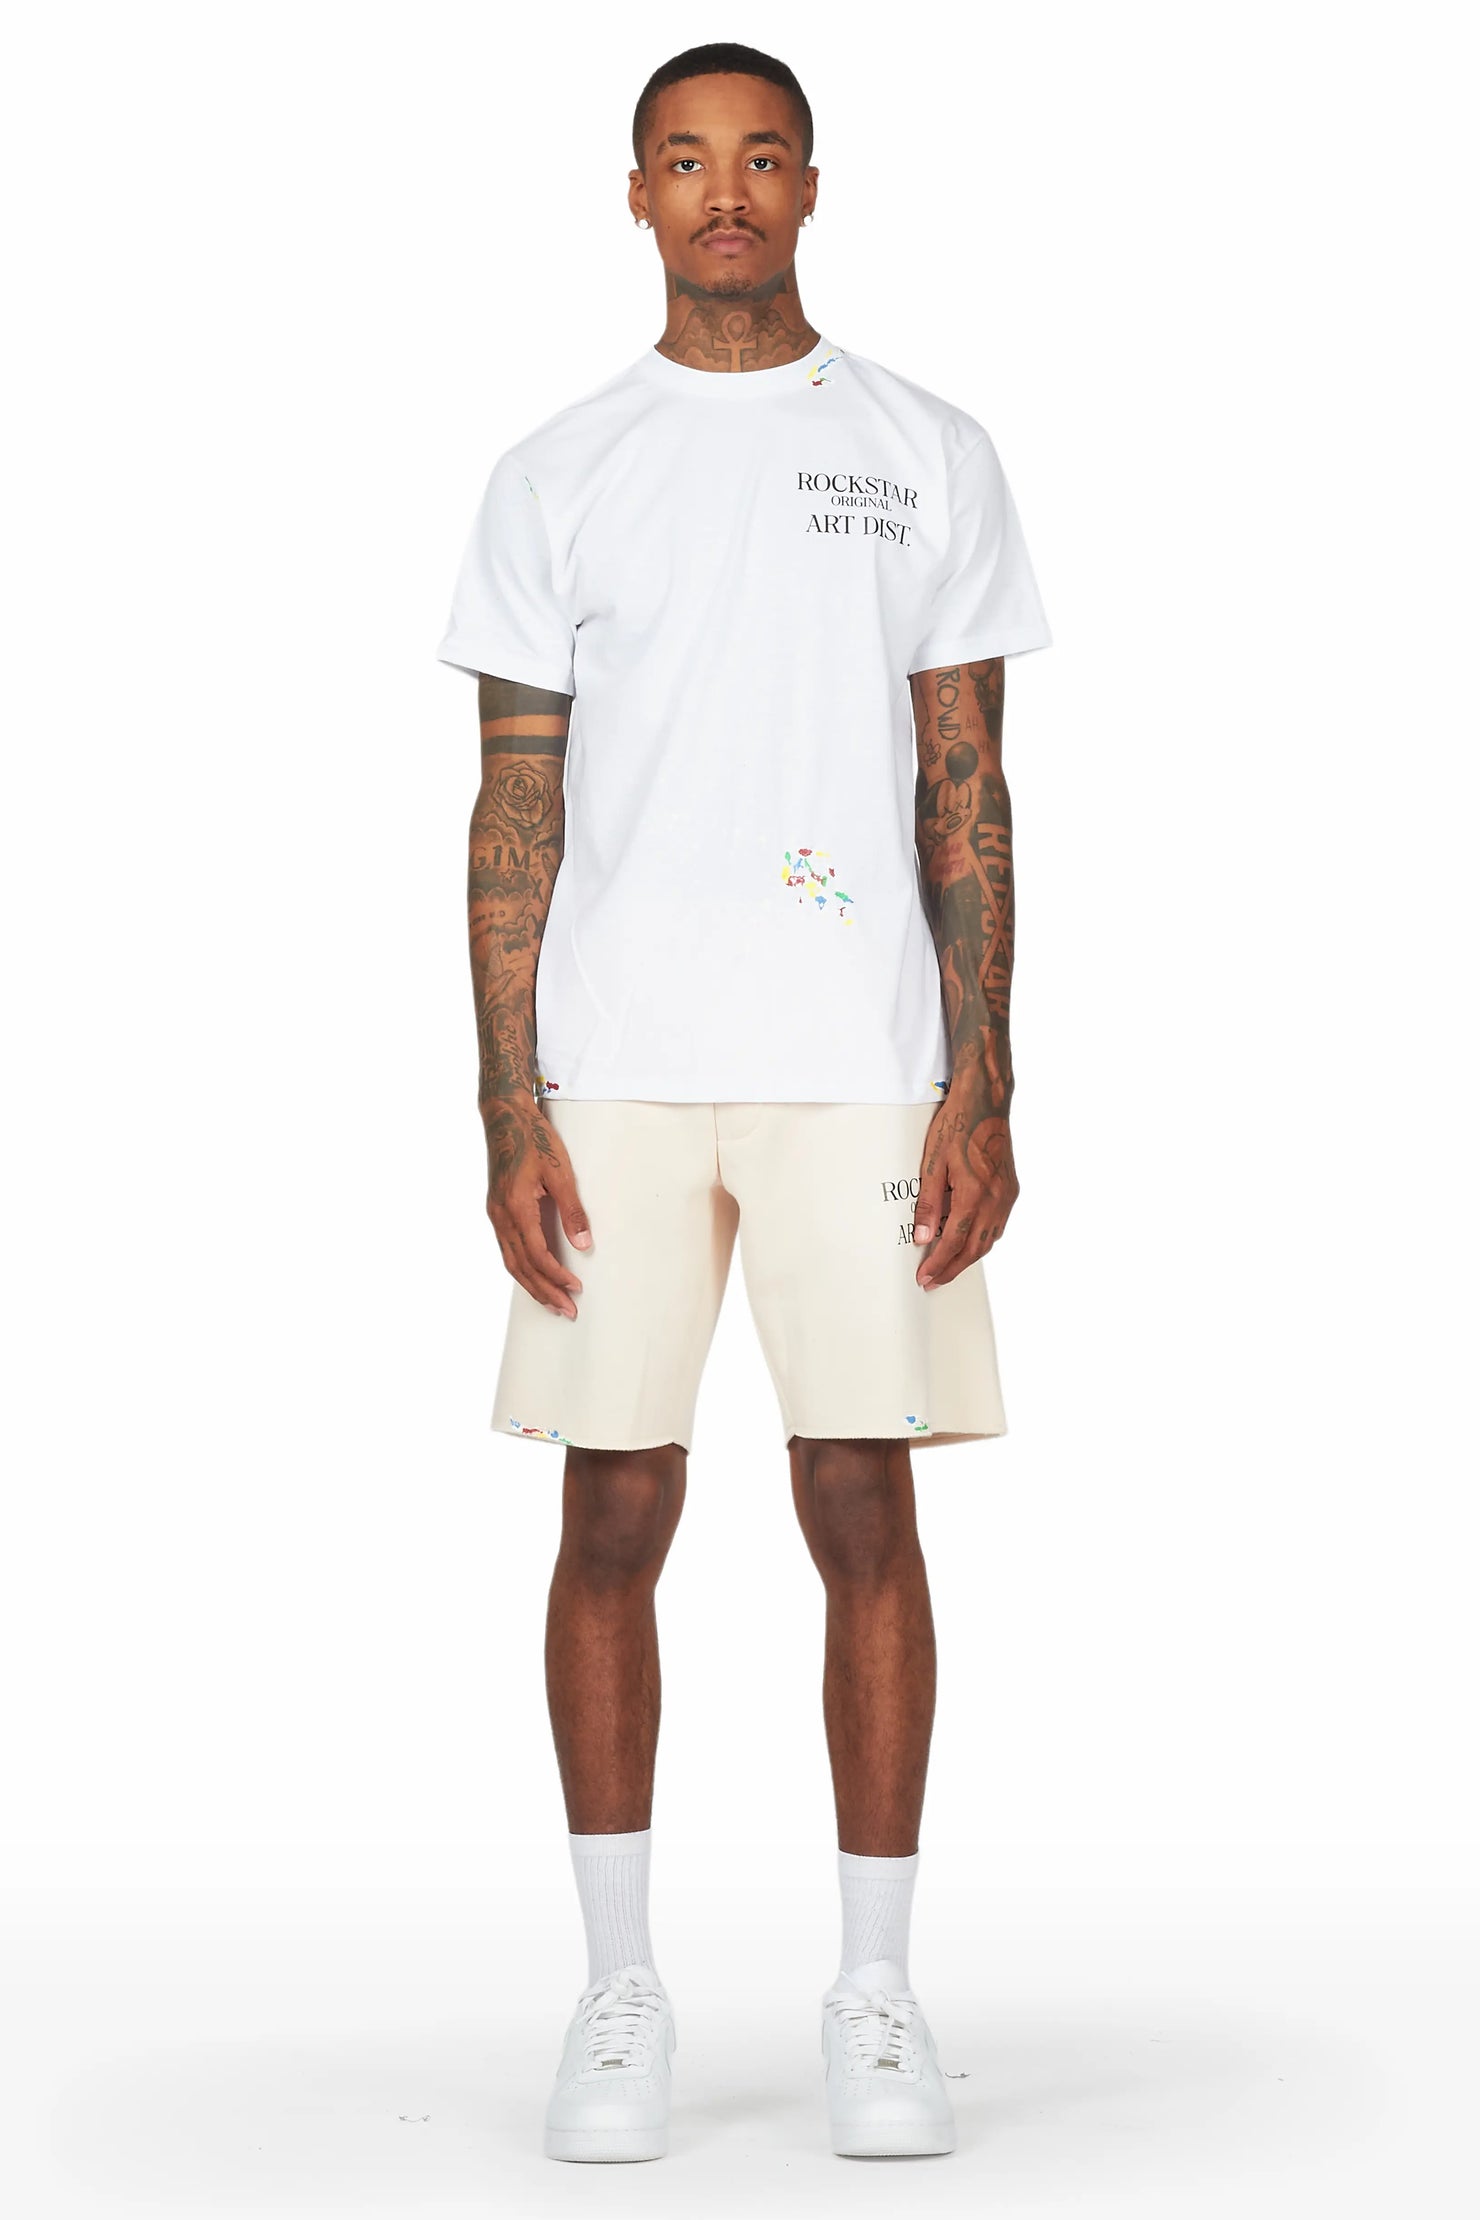 Rockstar Art Dist. White/Beige T-Shirt Short Set